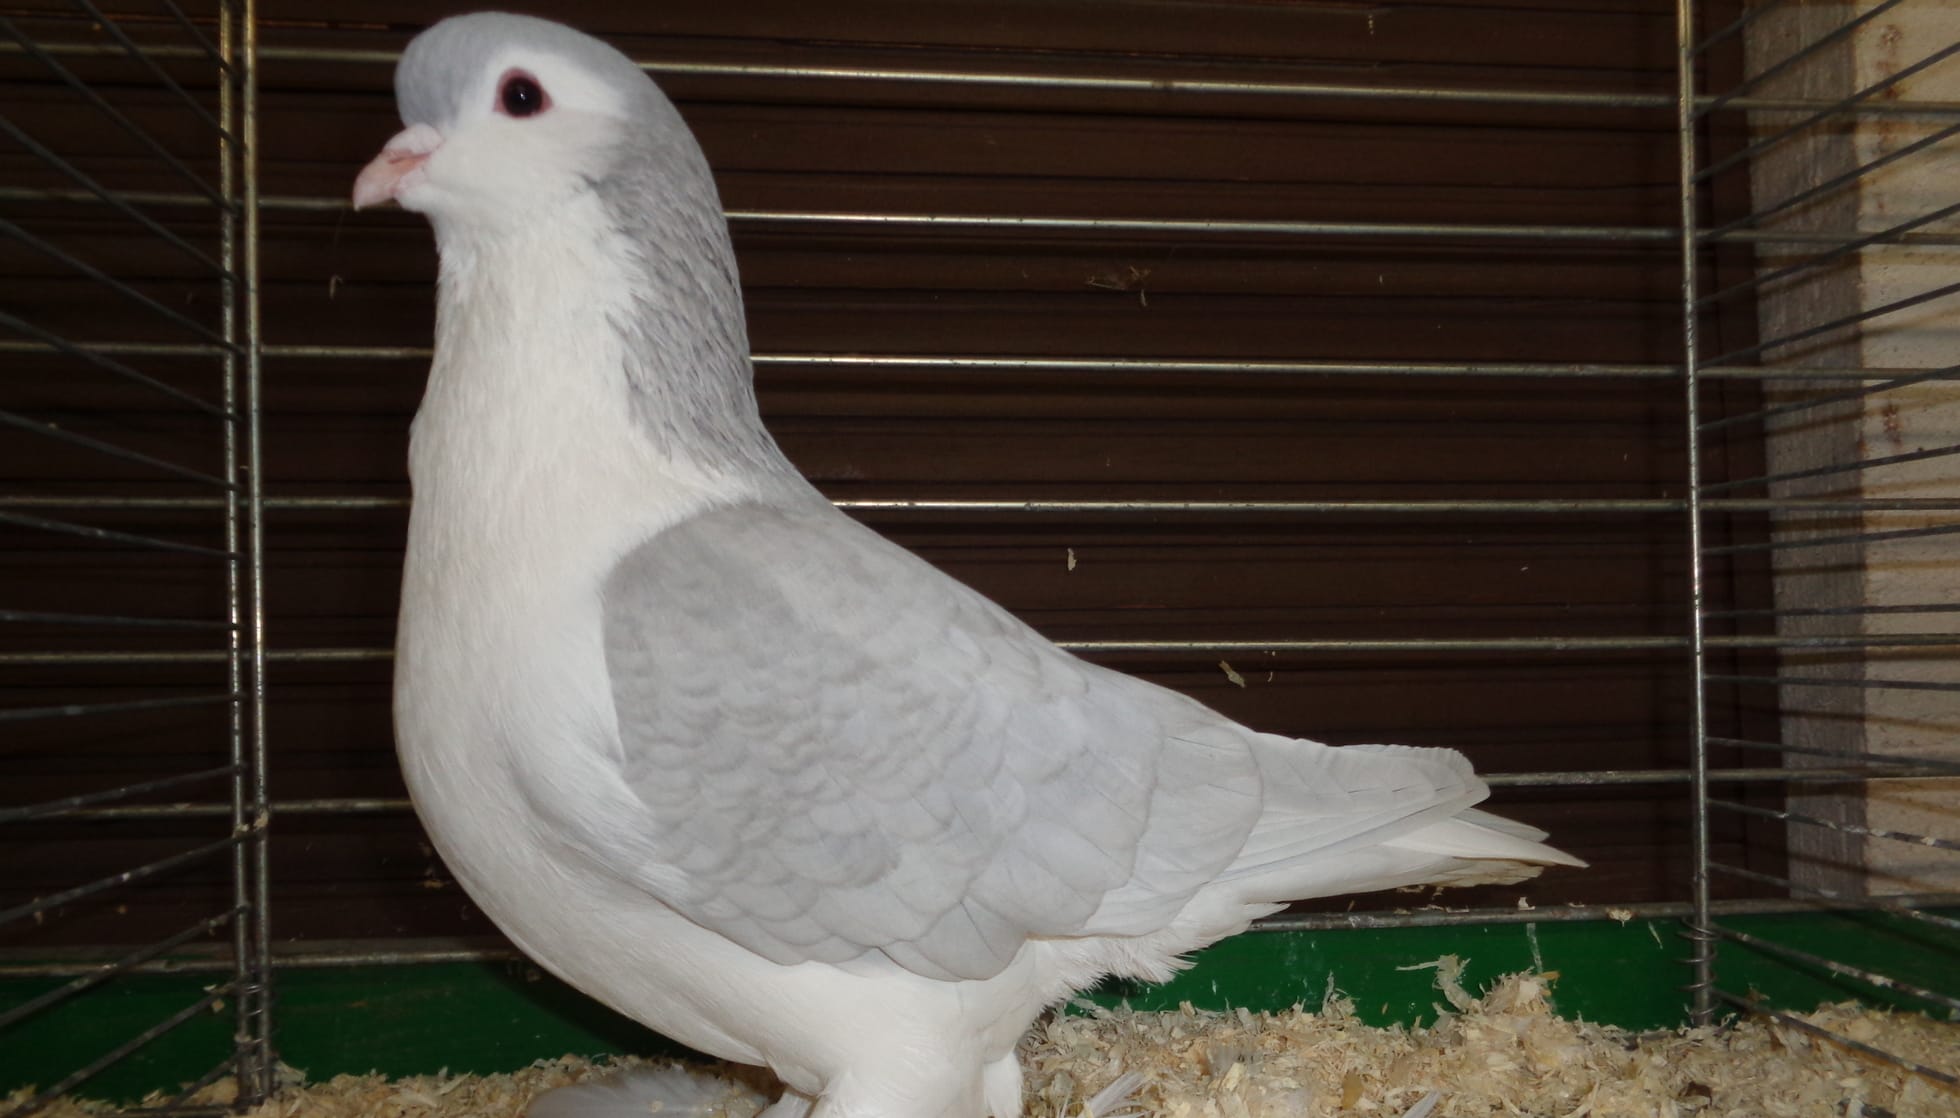 Lahore Pigeon